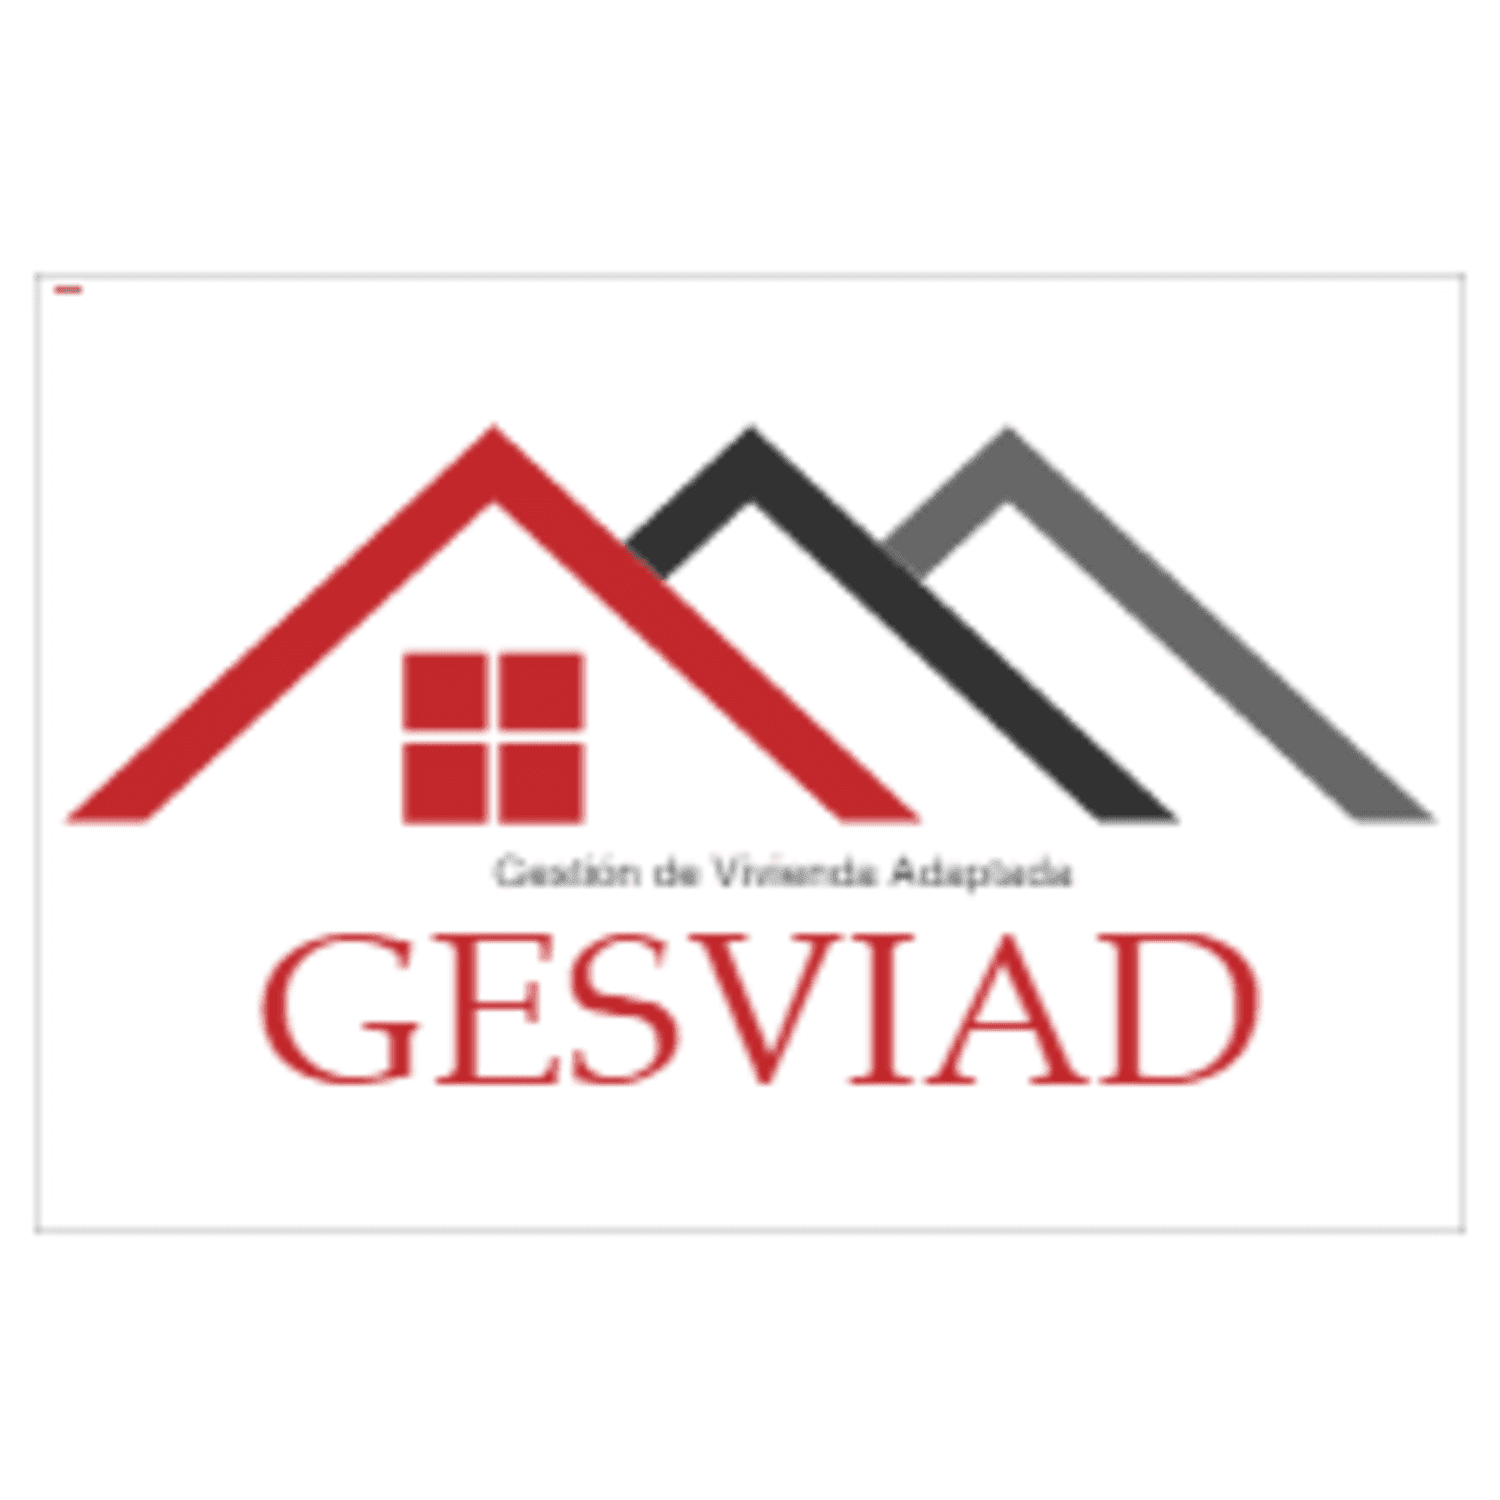 Gesviad